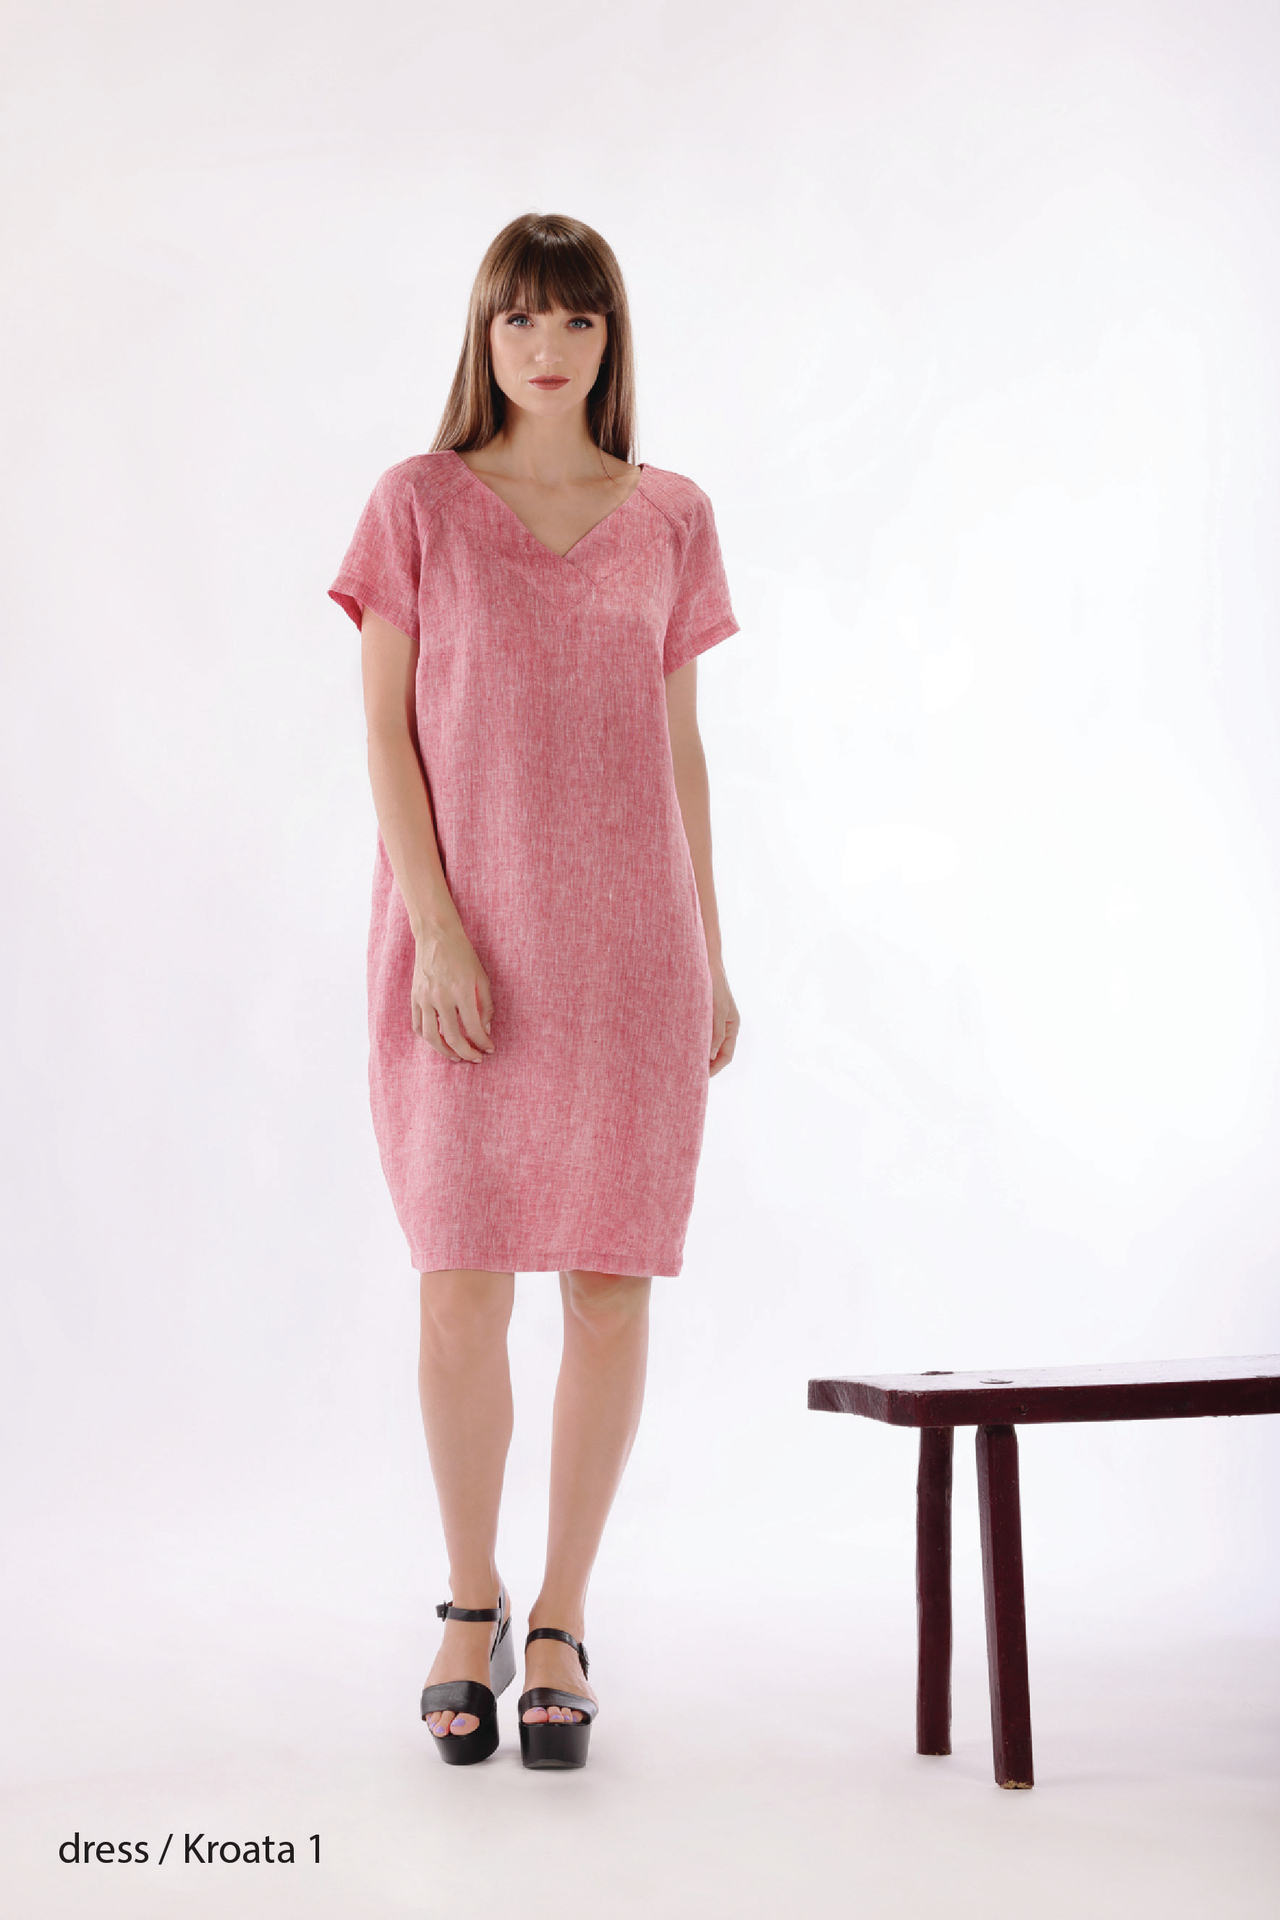 GR Nature clothing, dress Kroata-1 pink - De exclusief